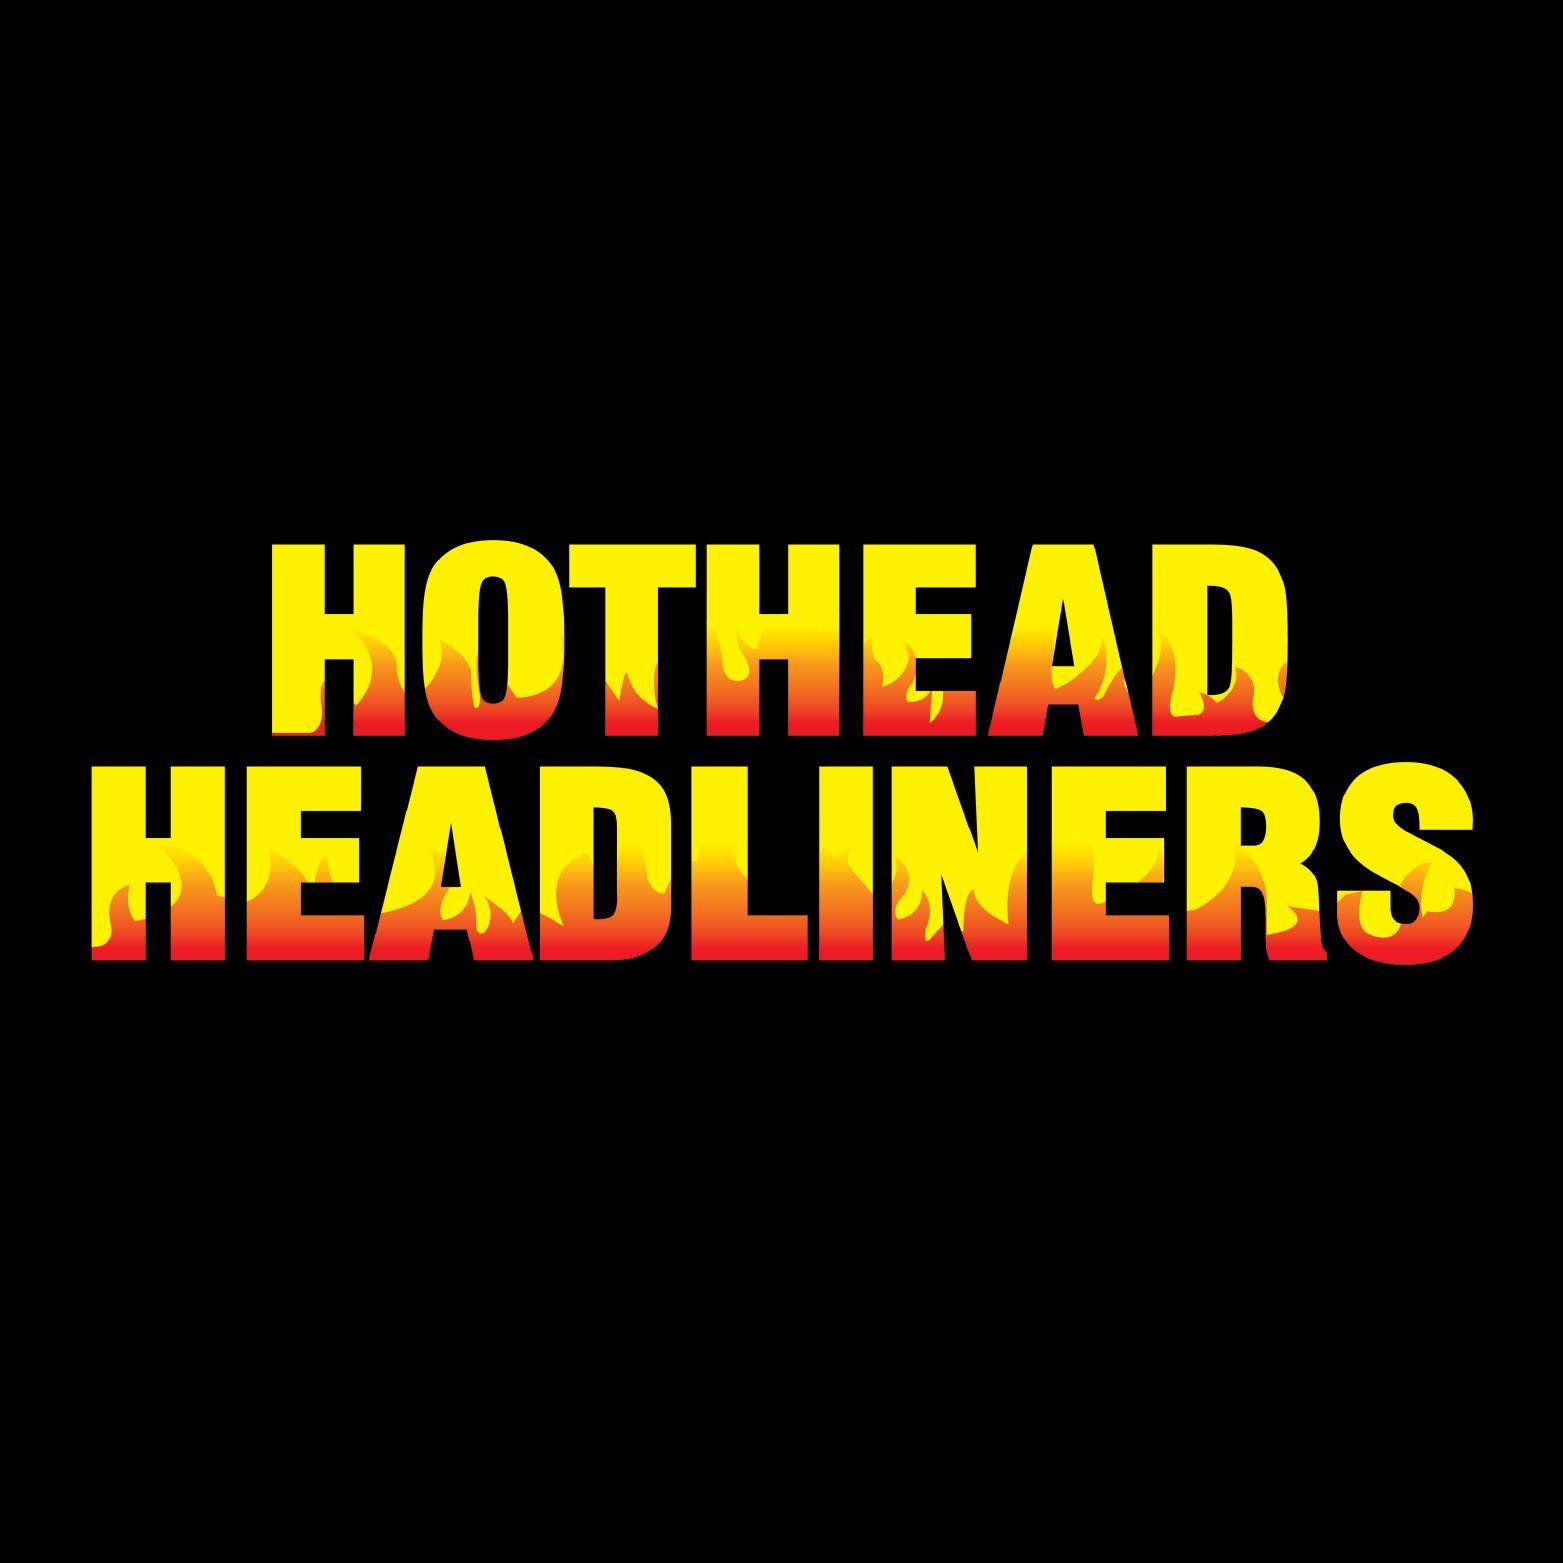 hothead headliners logo.